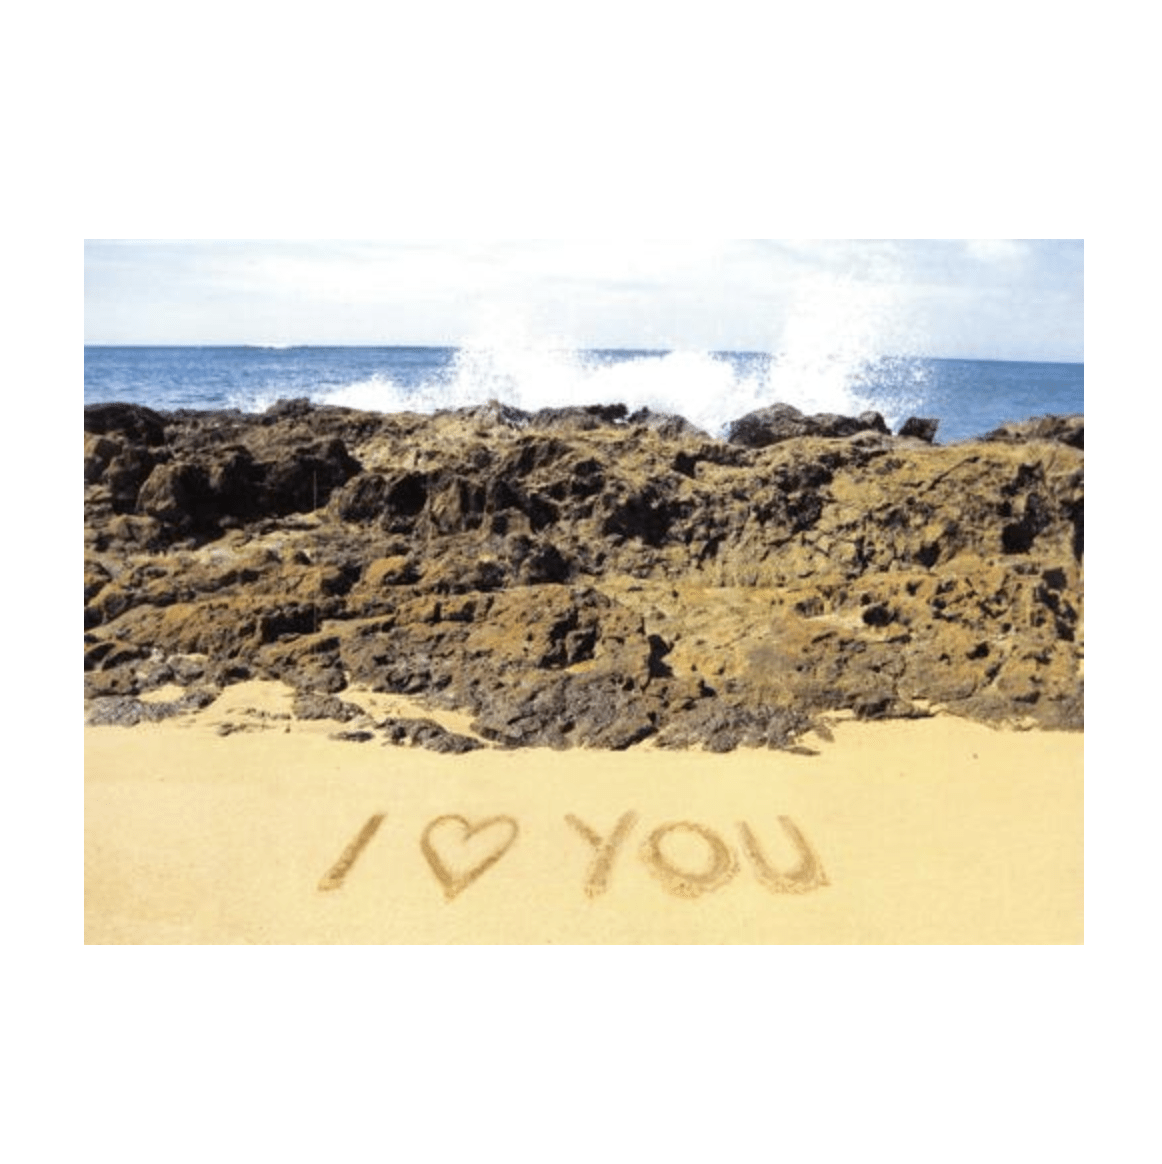 I Love You (Salt Pond Beach) Greeting Card